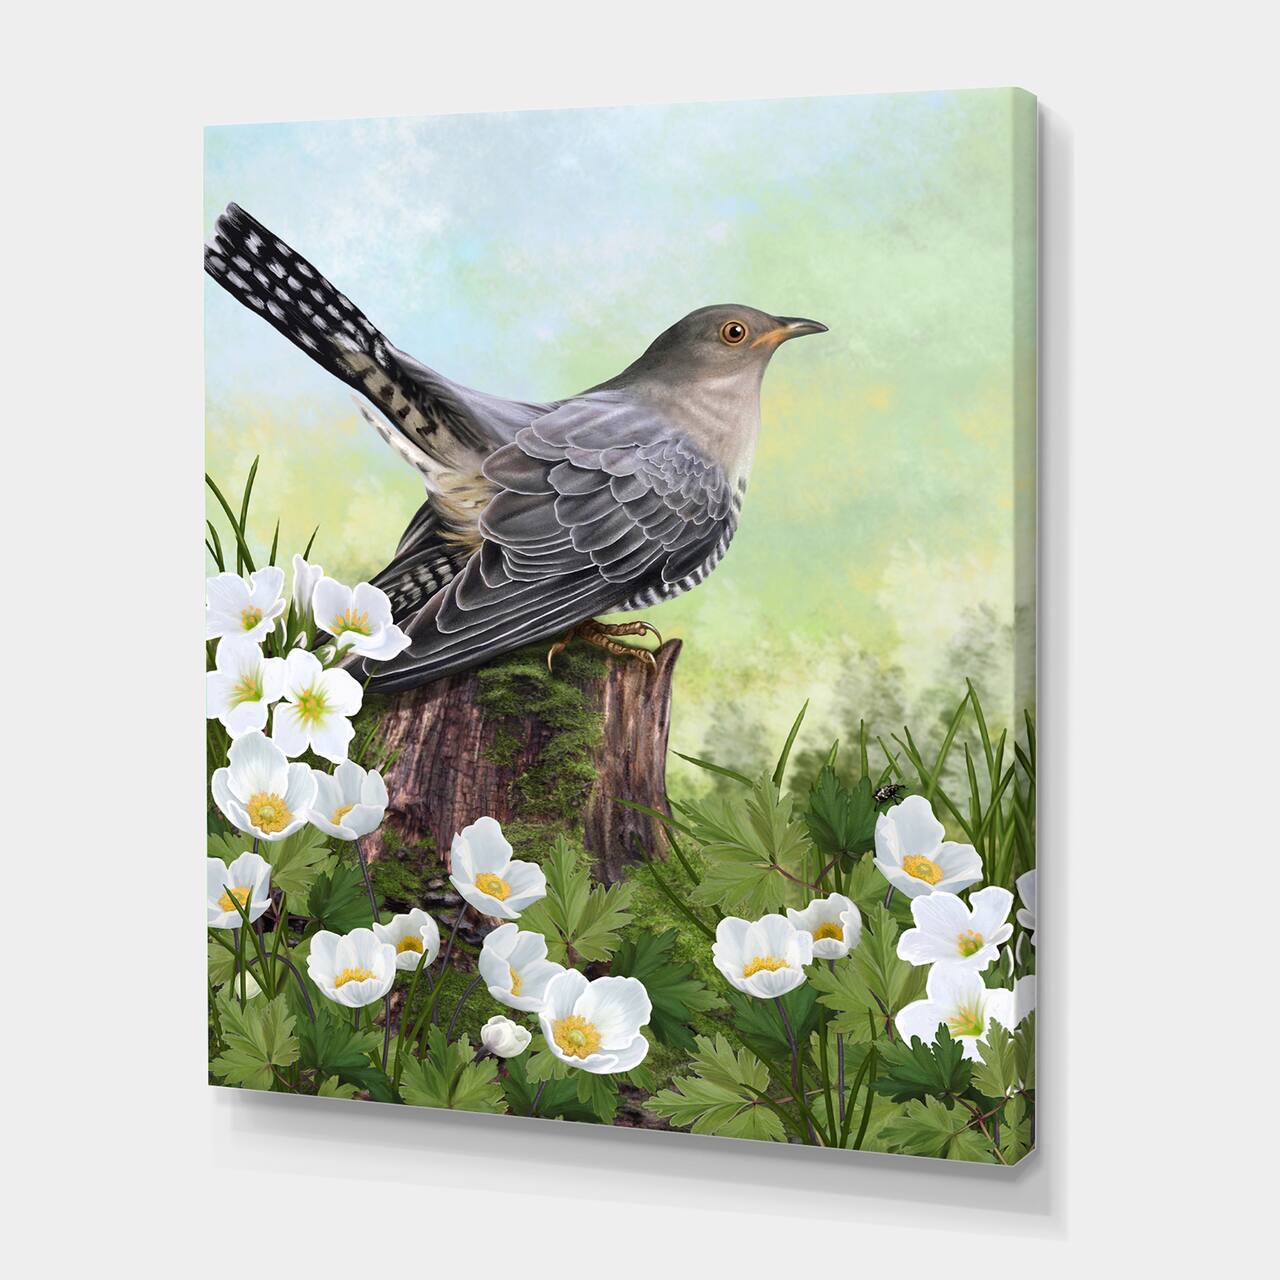 Designart - Cuckoo Bird On An Old Stump - Traditional Canvas Wall Art Print